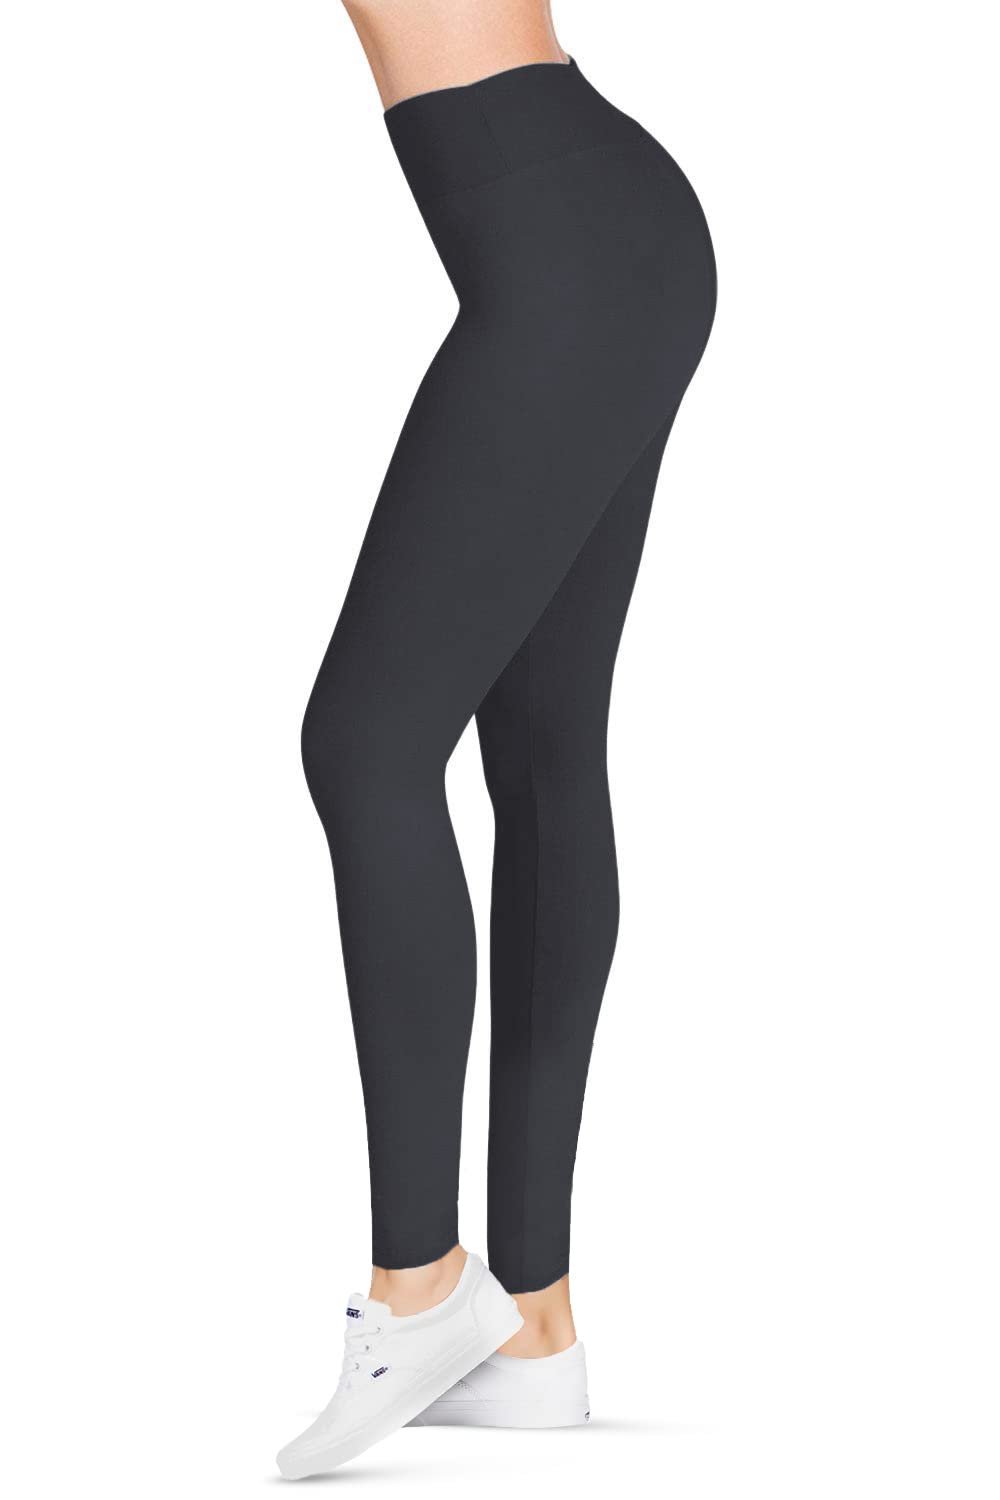 High Waisted Charcoal Leggings - SATINA - Yoga & Workout - Plus & Regular Sizes - 3 Waistband - Free Shipping & Returns